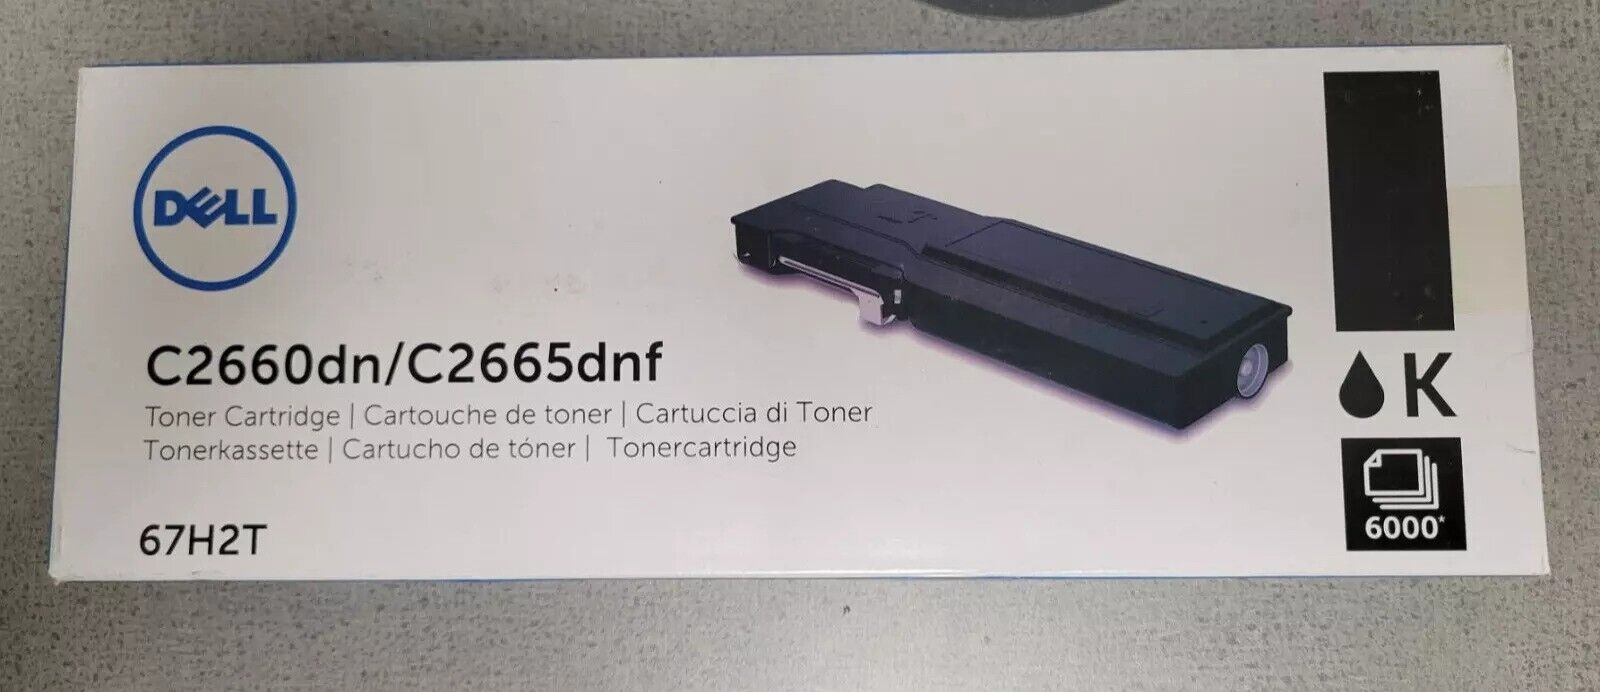 New Genuine Factory Sealed Dell C2660dn & C2665dnf 67H2T Black Toner Cartridge